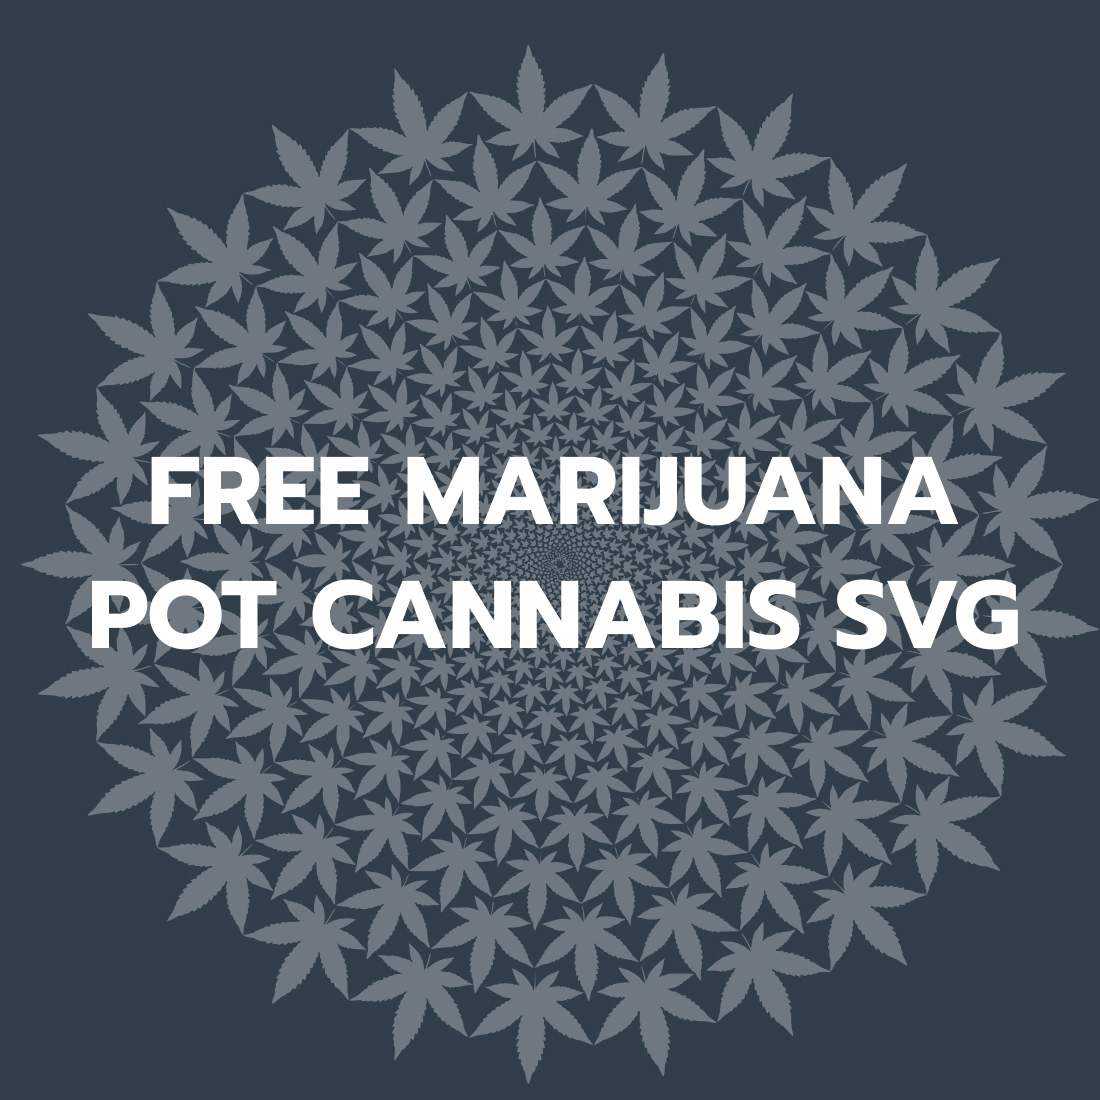 Free Marijuana Pot Cannabis SVG cover.